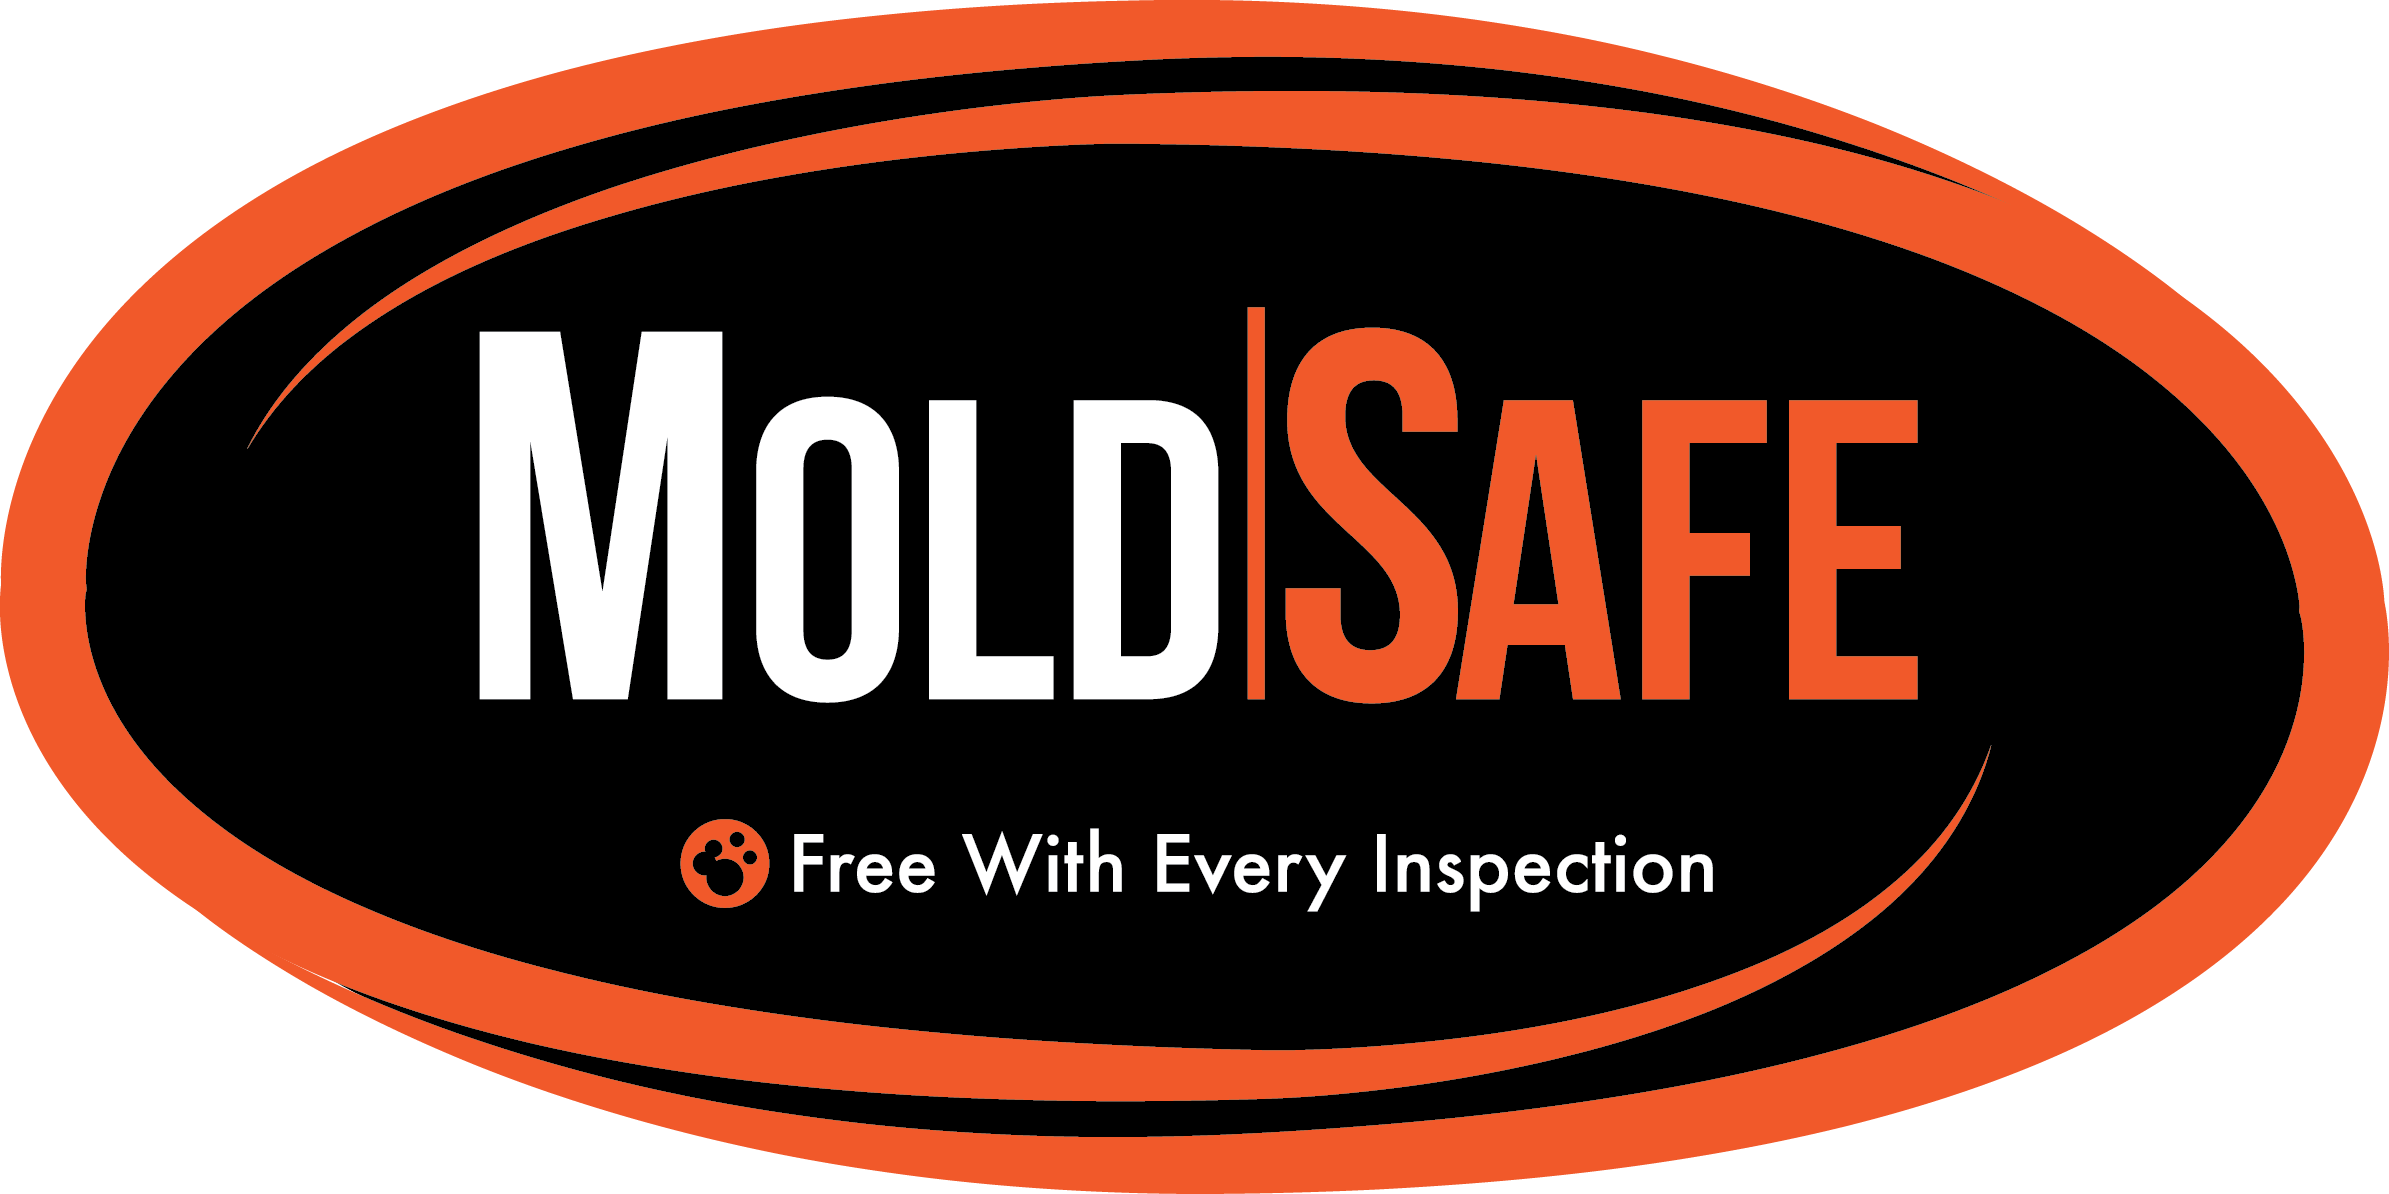 Mold Safe